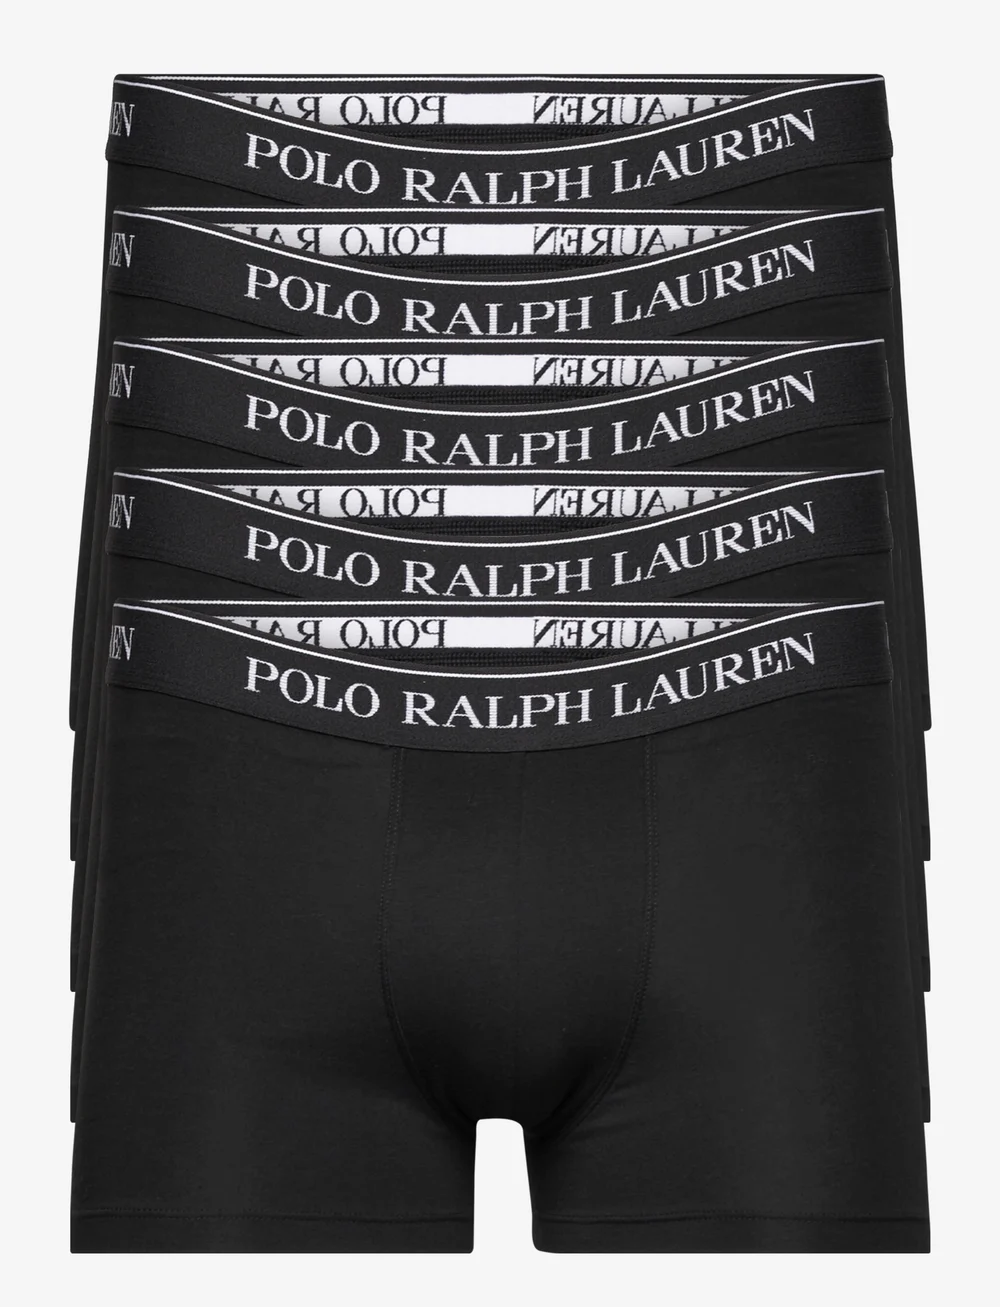 Polo Ralph Lauren Underwear Classic Stretch Cotton Trunk 5-pack - Boxers 